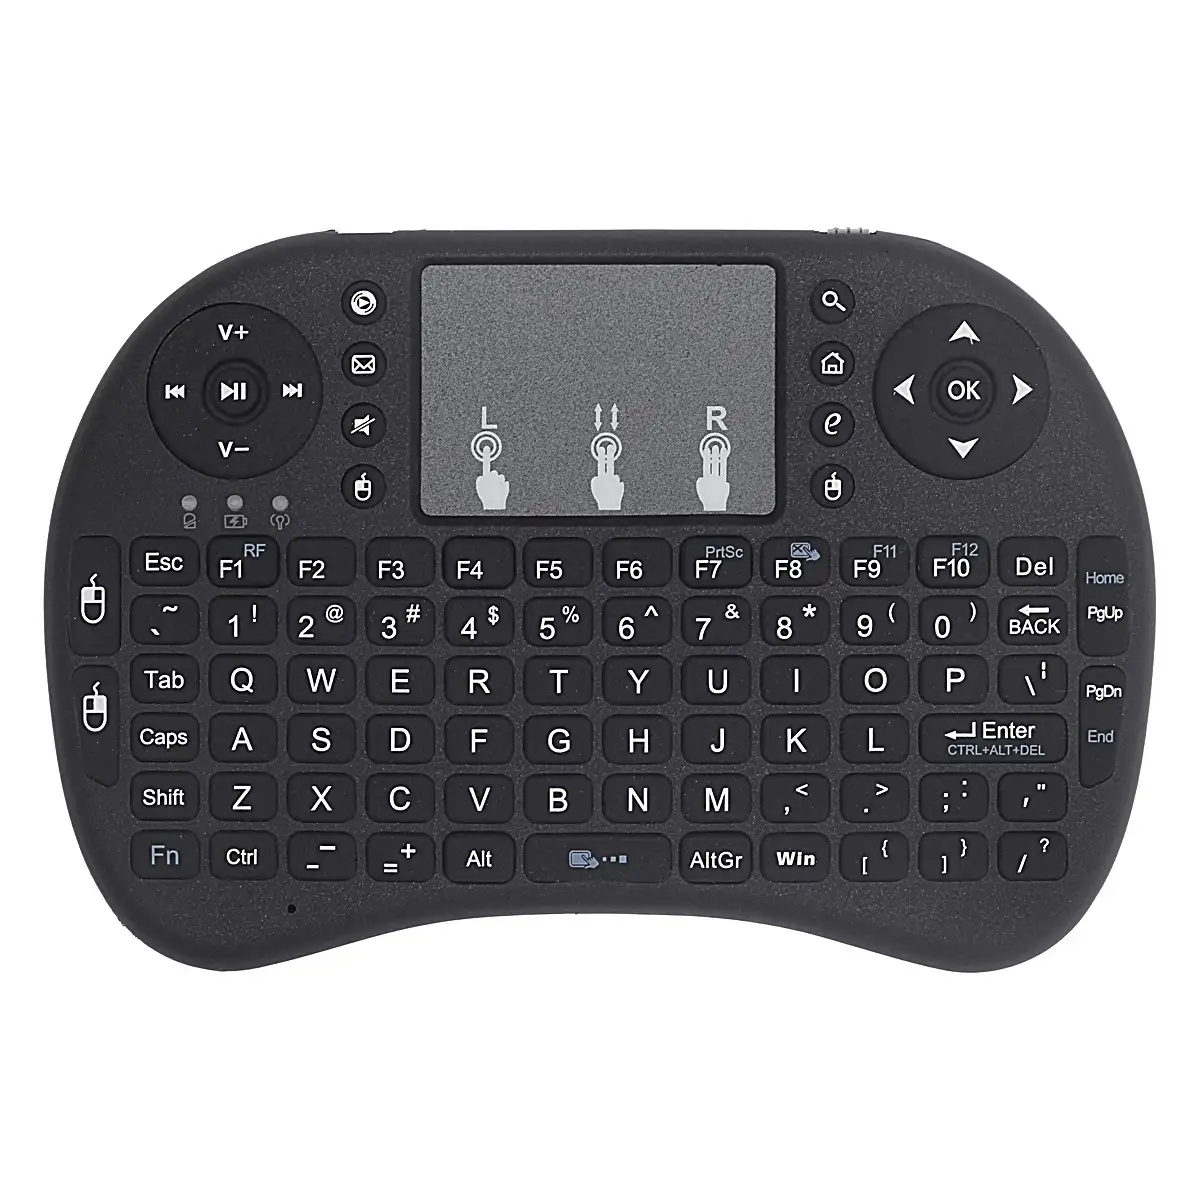 Keyboard Mini Mini Russian Keyboard Wireless Keyboard Backlit Air Mouse Russian Spanish Keyboard For Laptop Notebook TV Box Mini 2.4G Wireless Keyboard Touchp